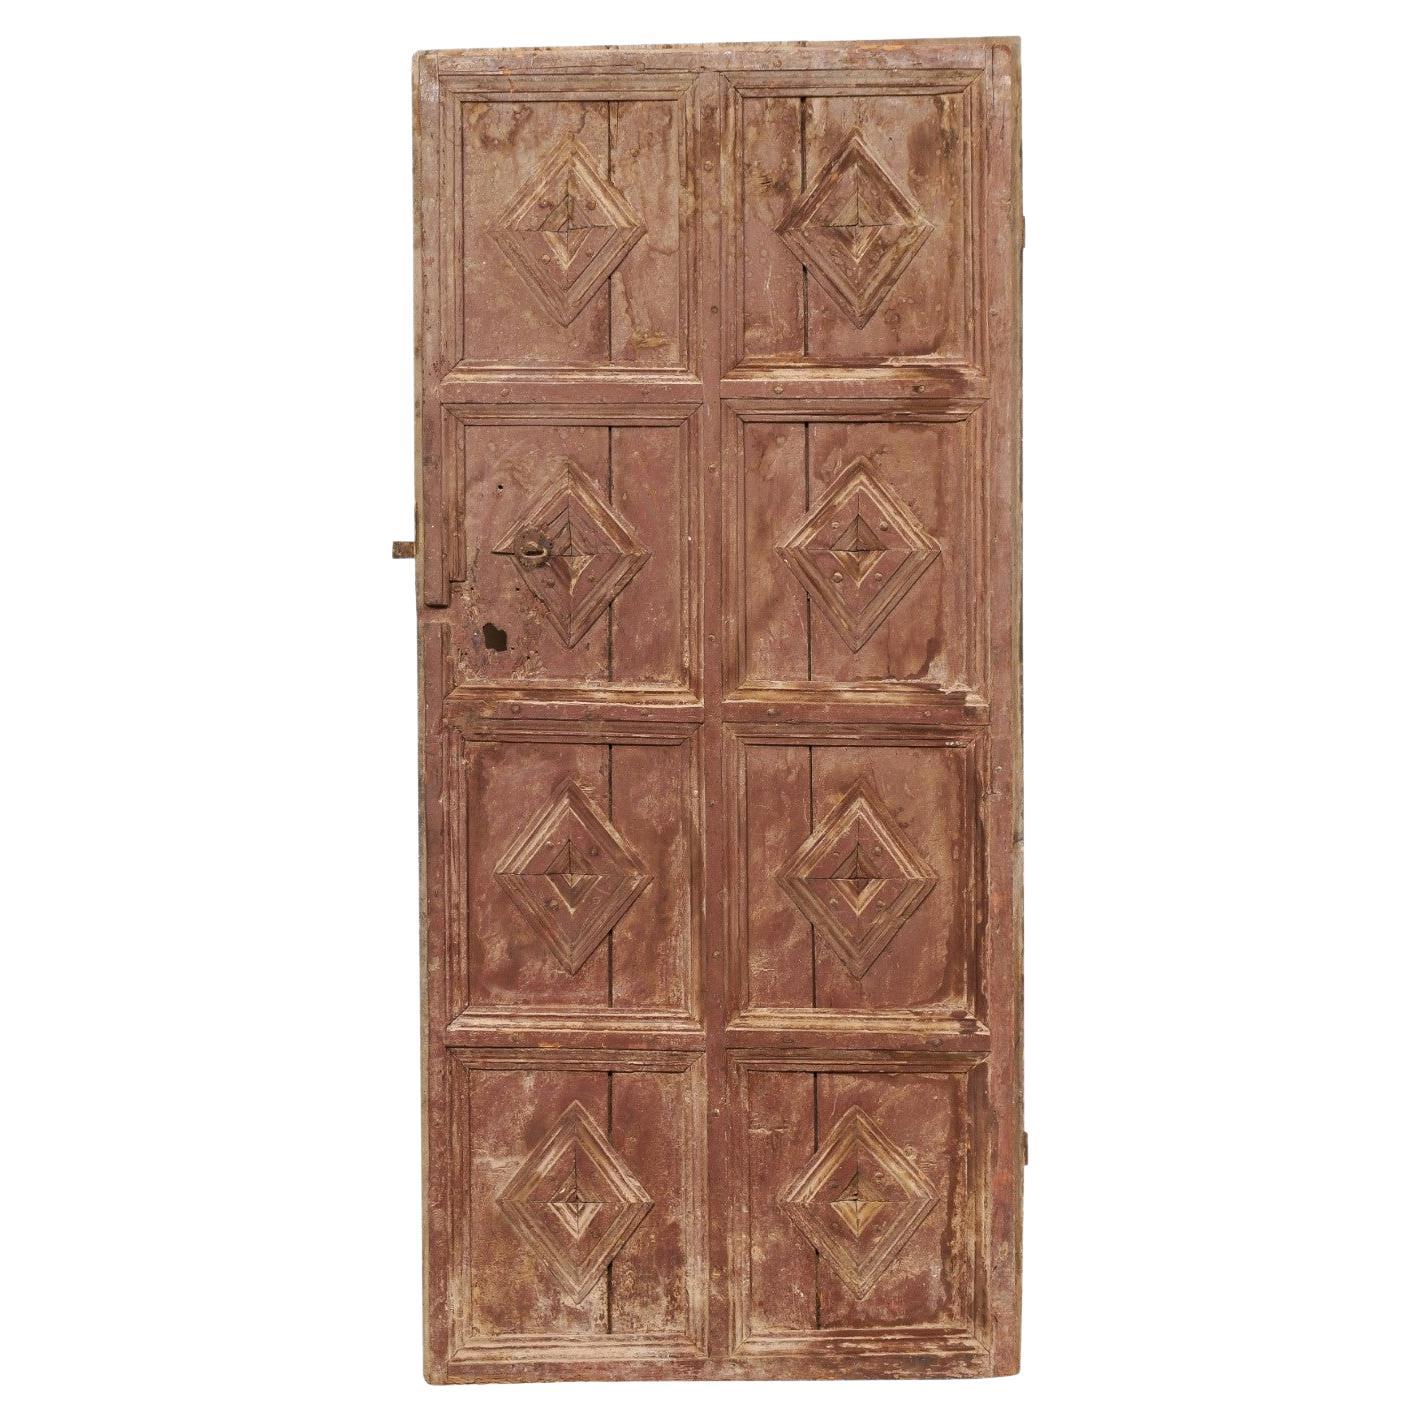 19th C. Spanish Eight-Panel Wood Door with Diamond Motiif & its Original Paint